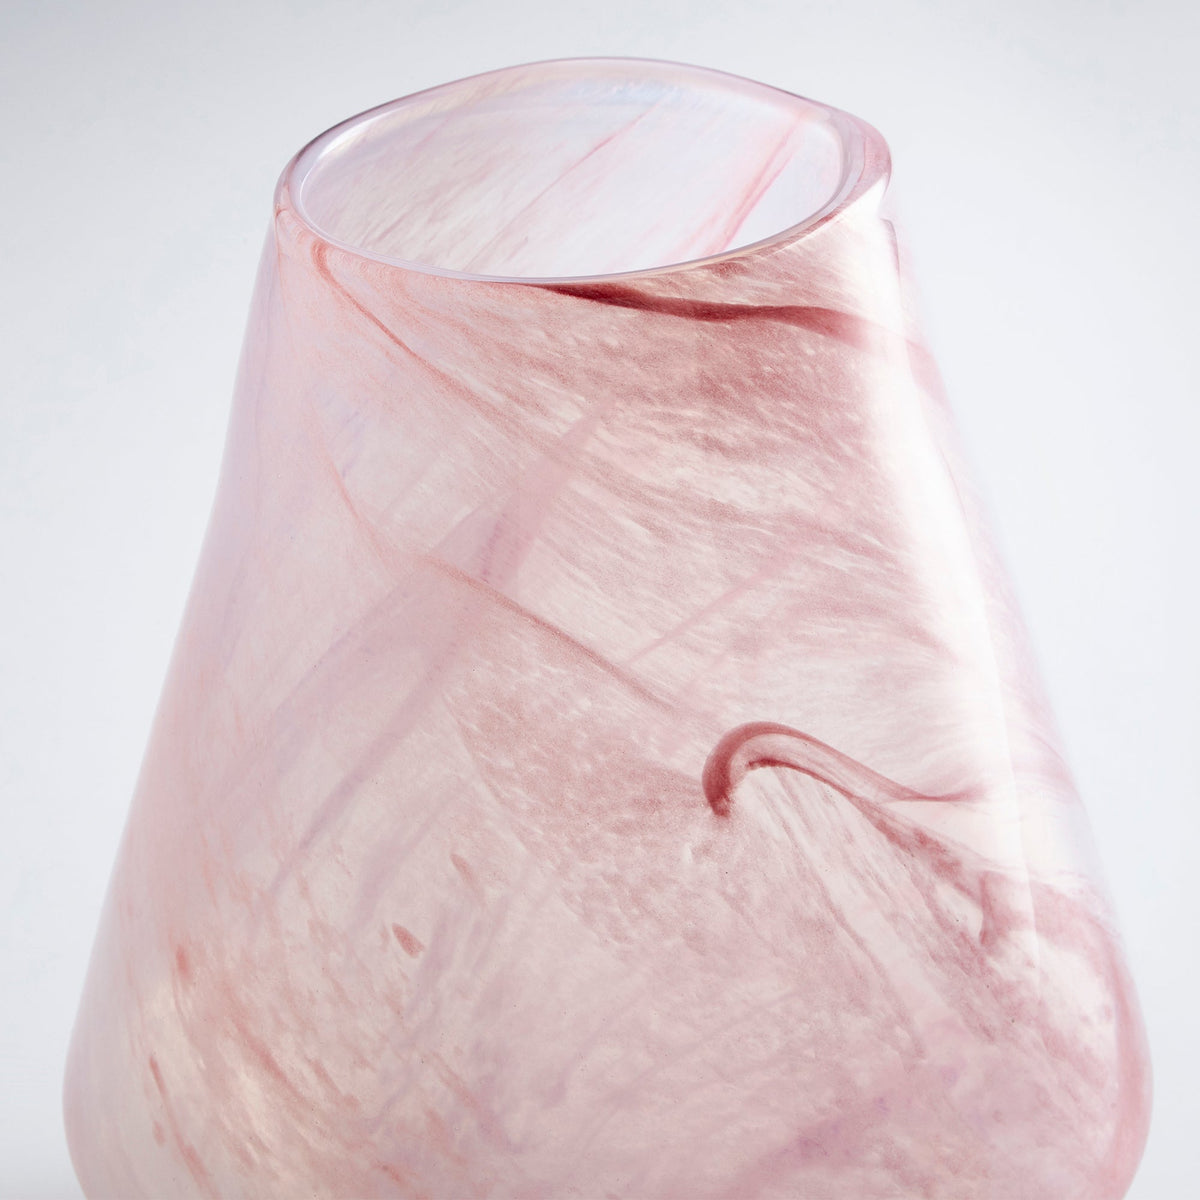 Atria Vase | Pink -Medium by Cyan